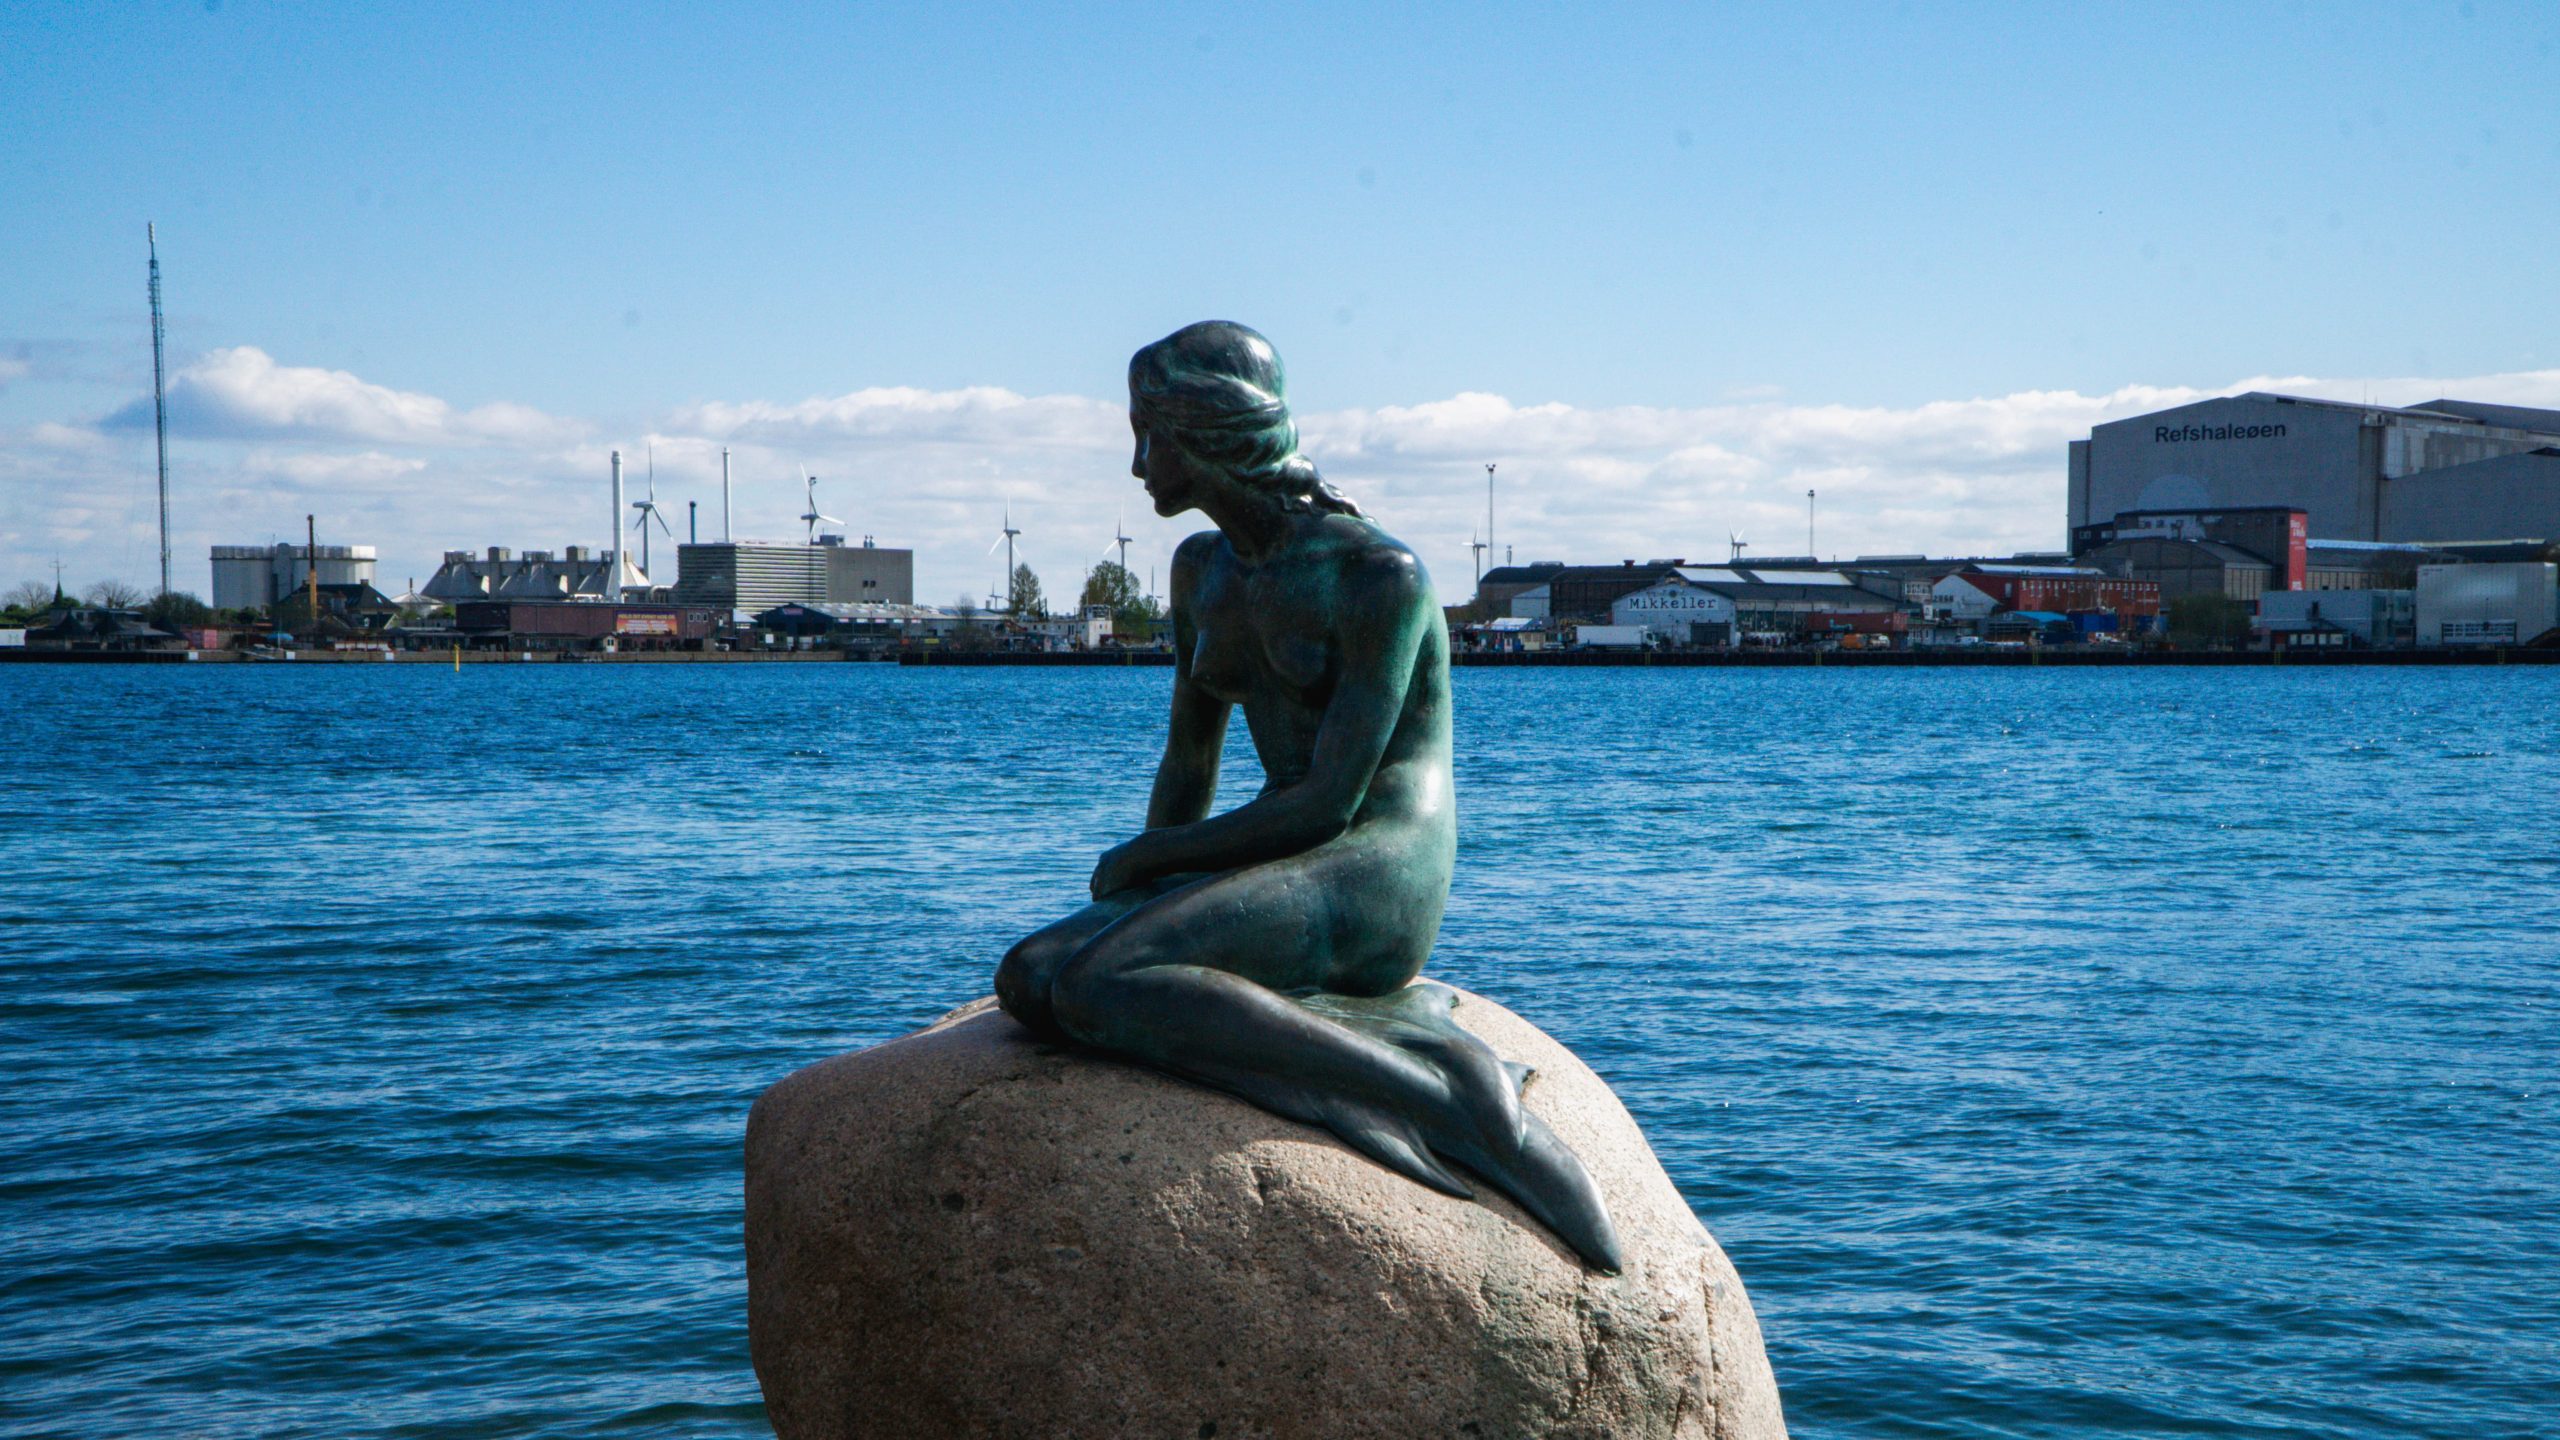 Little Mermaid Statue Copenhagen City Break Travel Guide self-guided walking tour